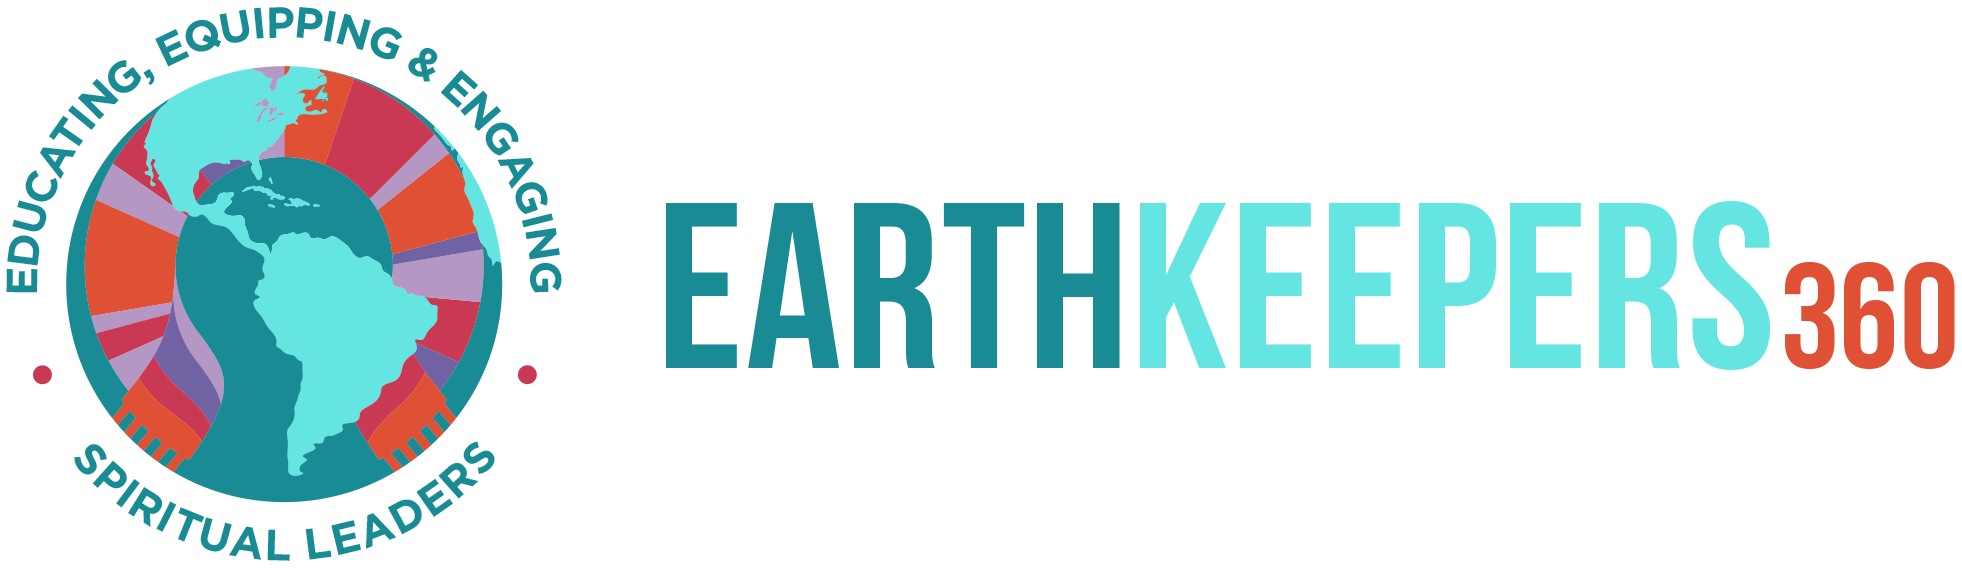 Earth Keepers 360 logo